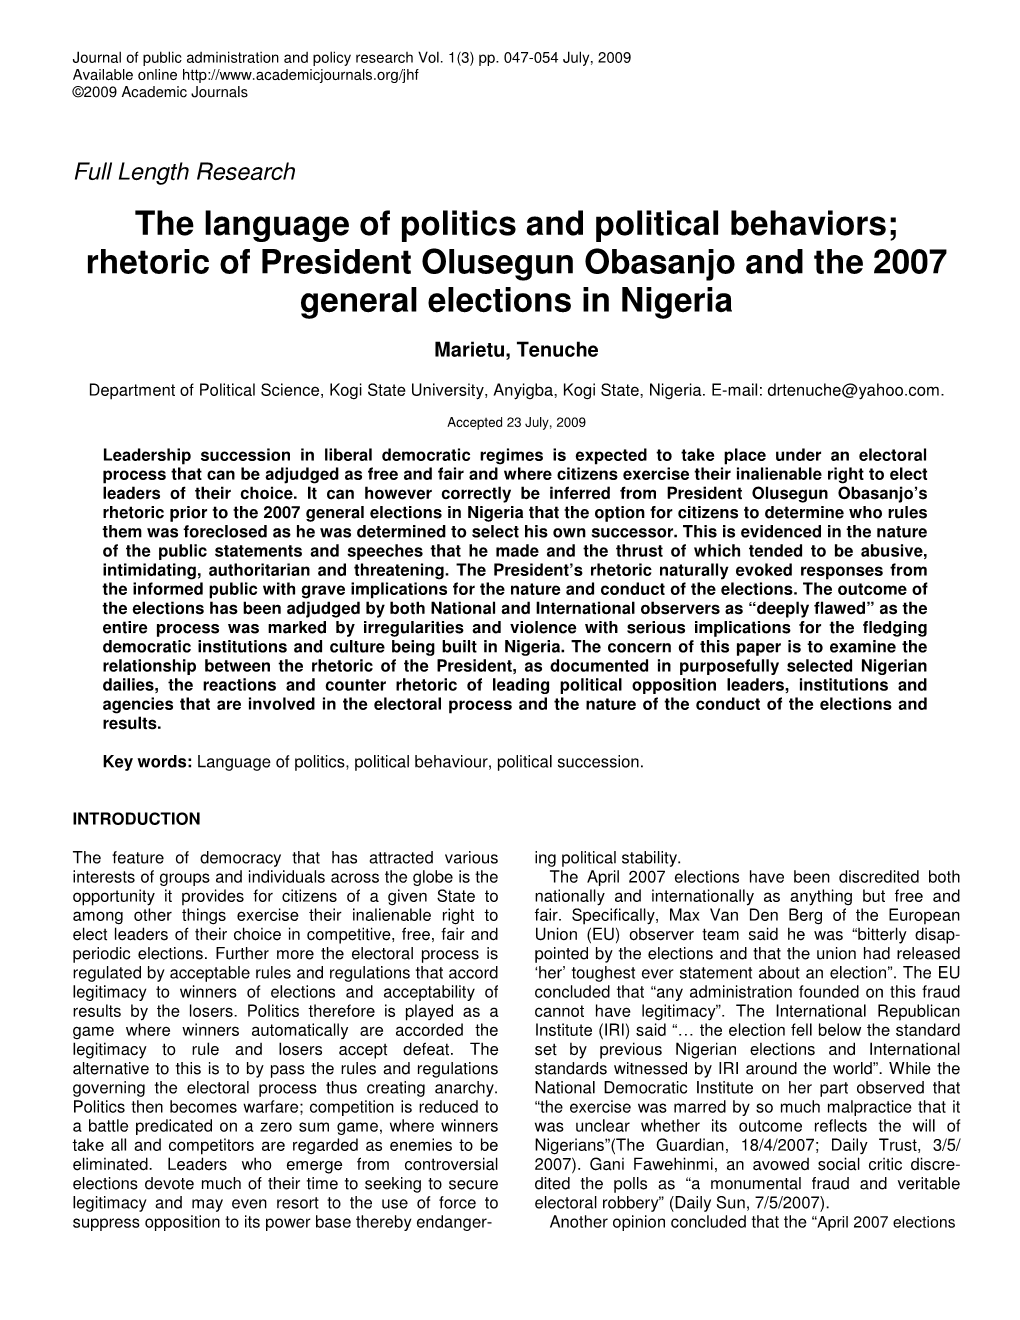 Rhetoric of President Olusegun Obasanjo and the 2007 General Elections in Nigeria